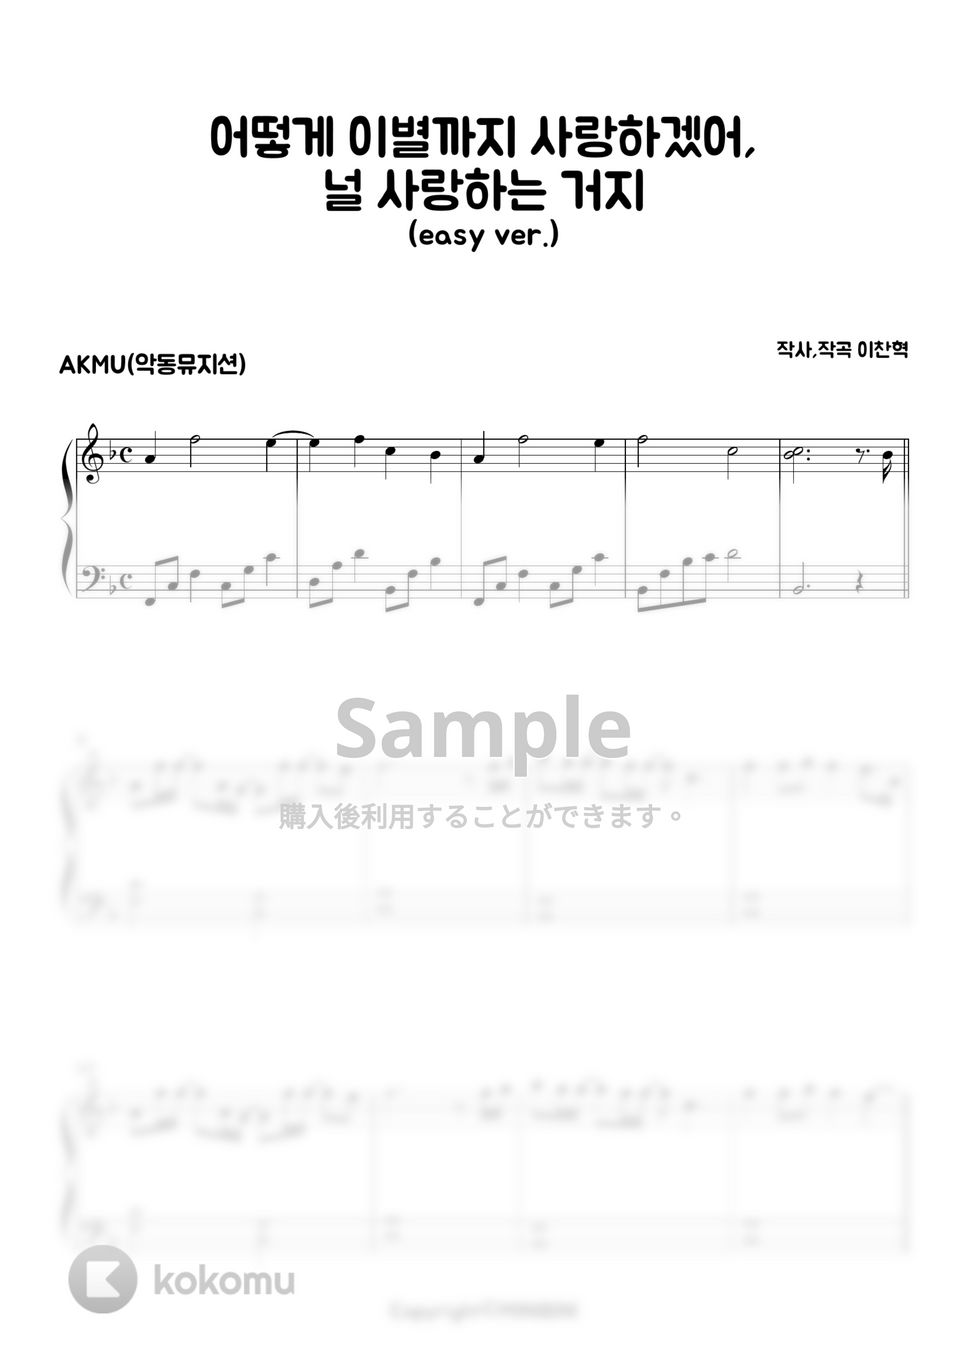 AKMU(悪童ミュージシャン) - How I can love the heartbreak (Easy ver.) by MINIBINI